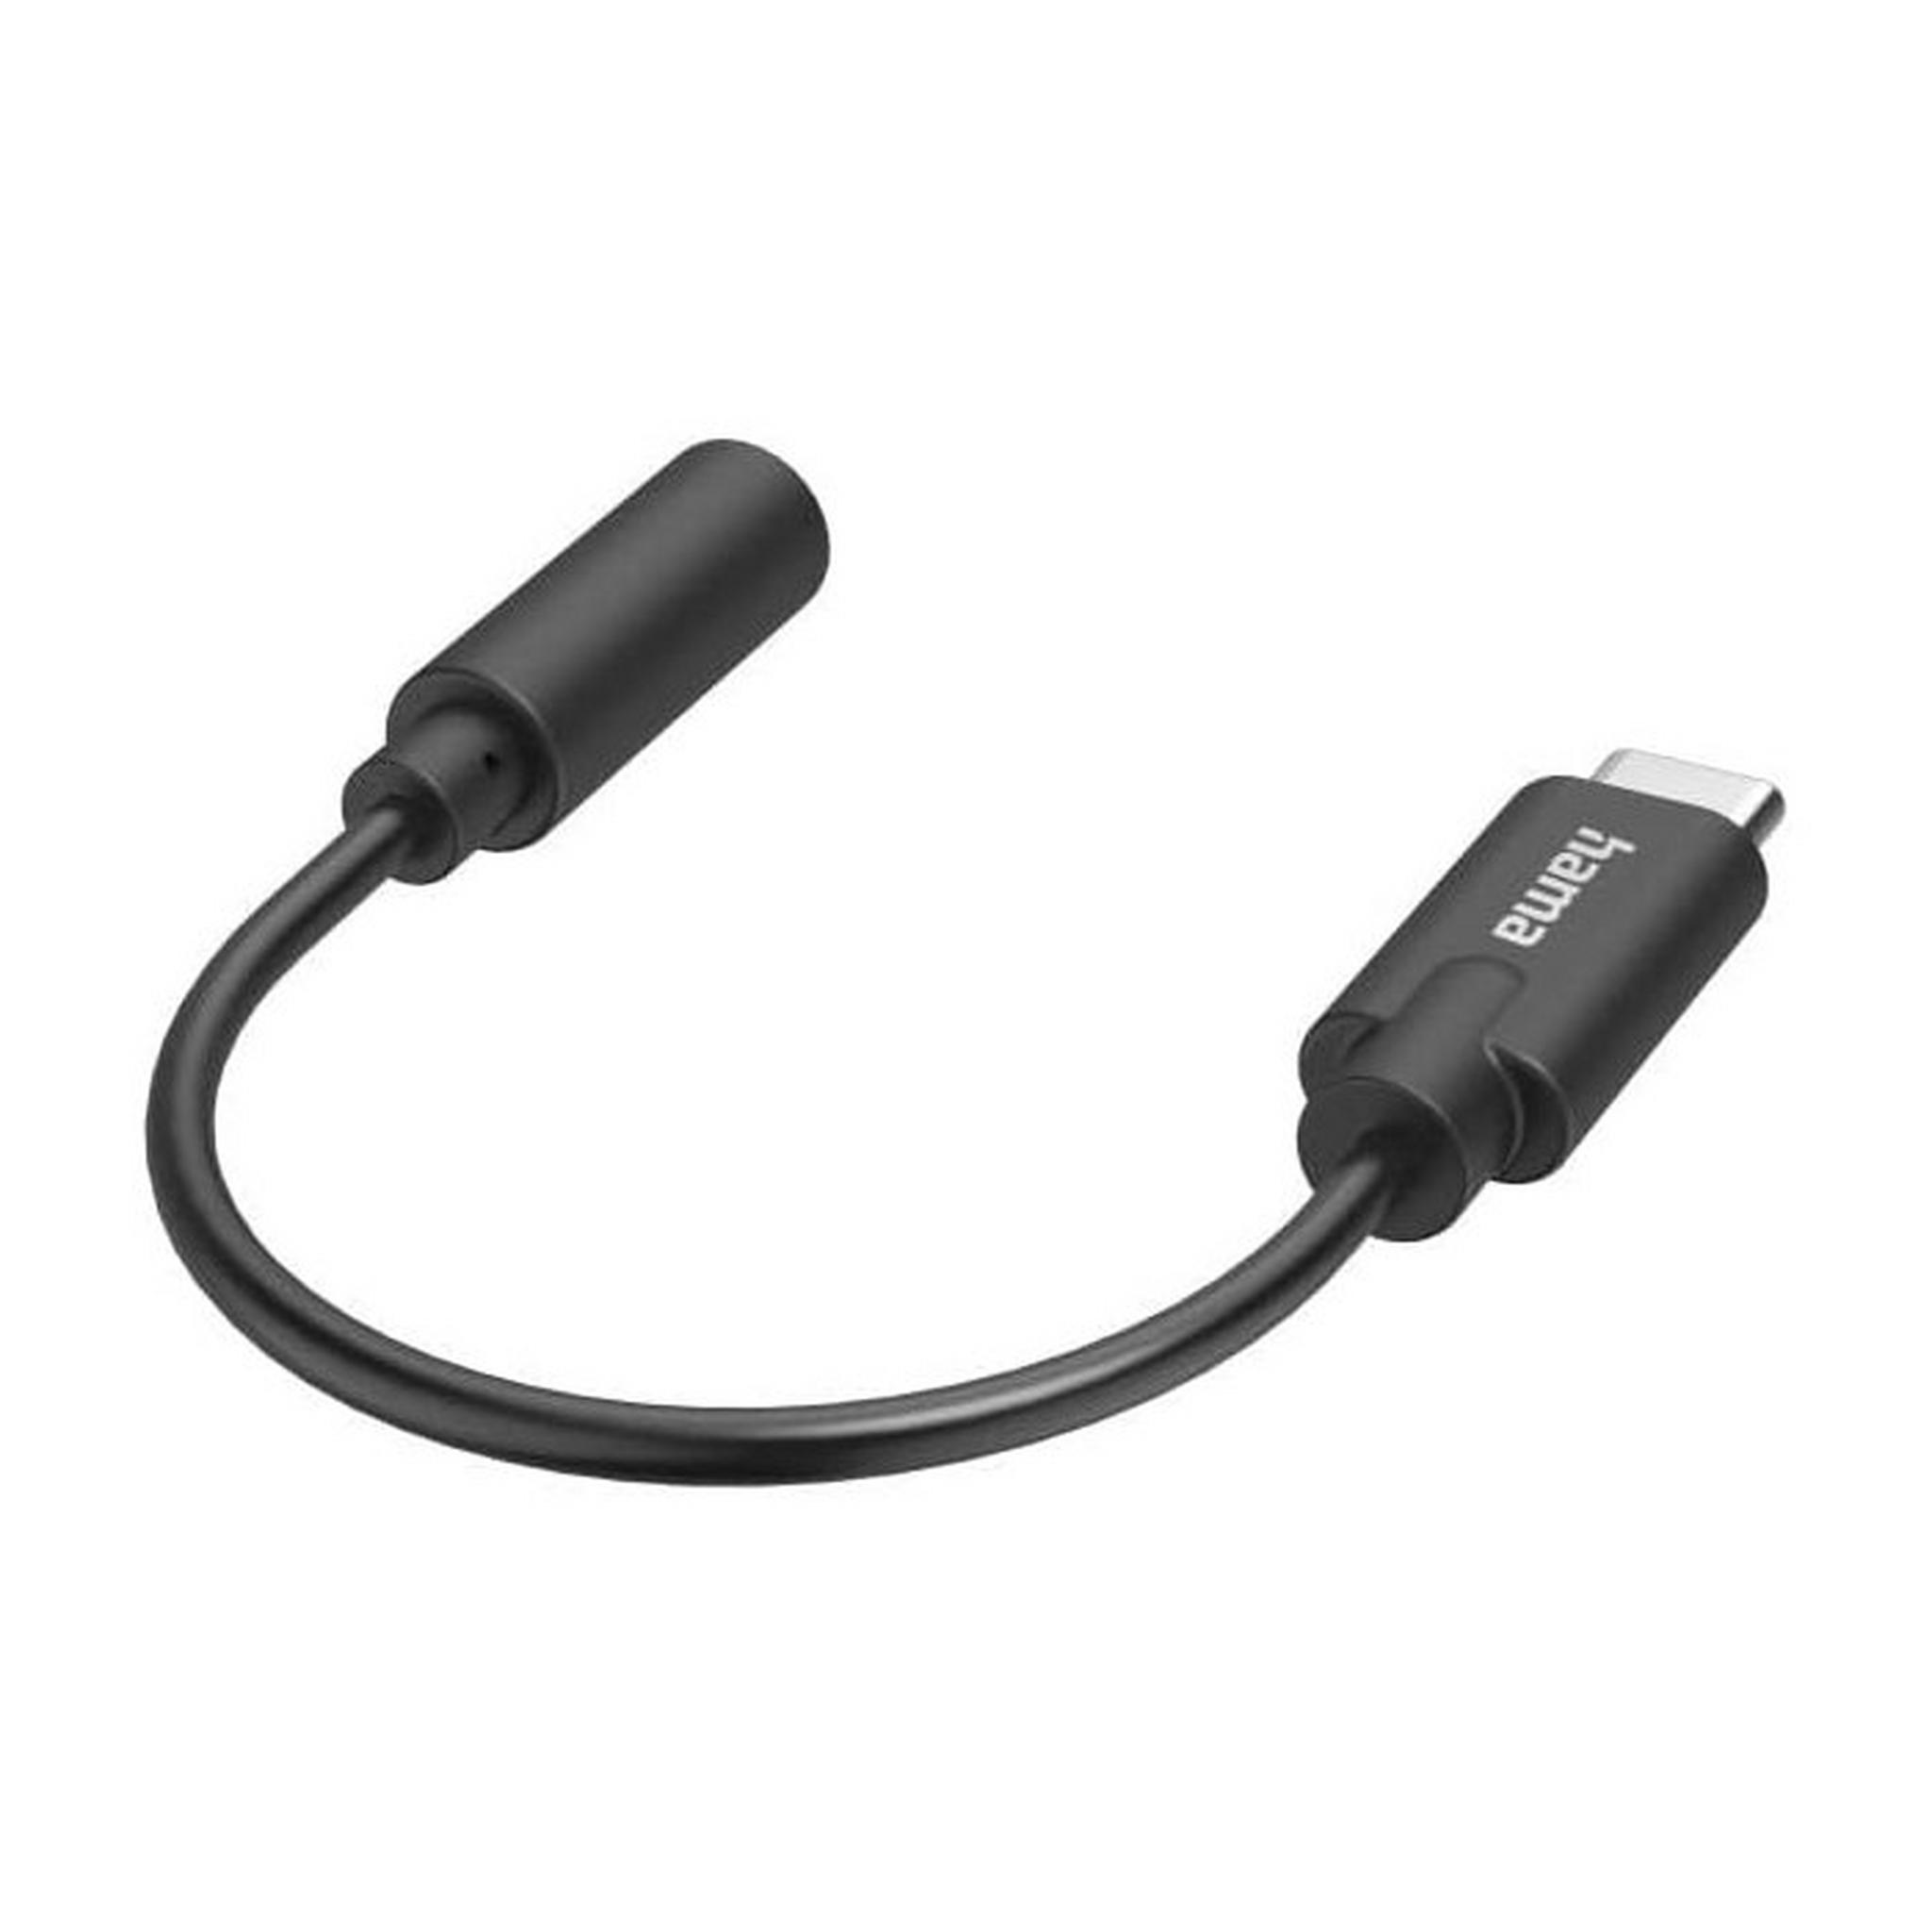 Hama Audio Adapter USB-C, 3.5MM, 200318 - Black